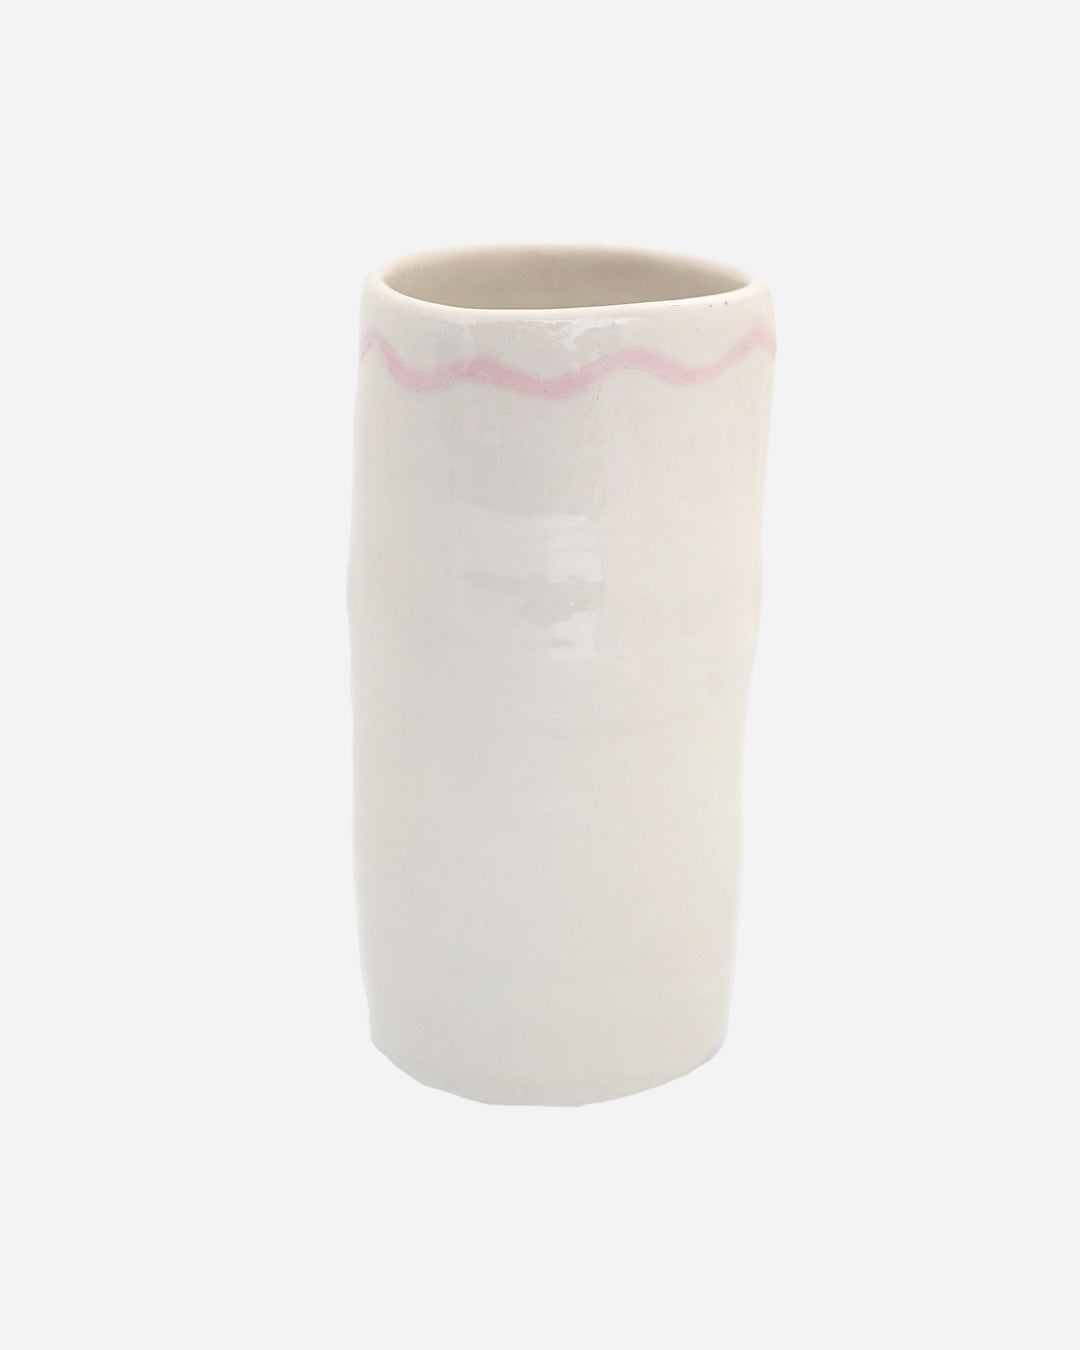 Squiggle Vase in Icing Sugar